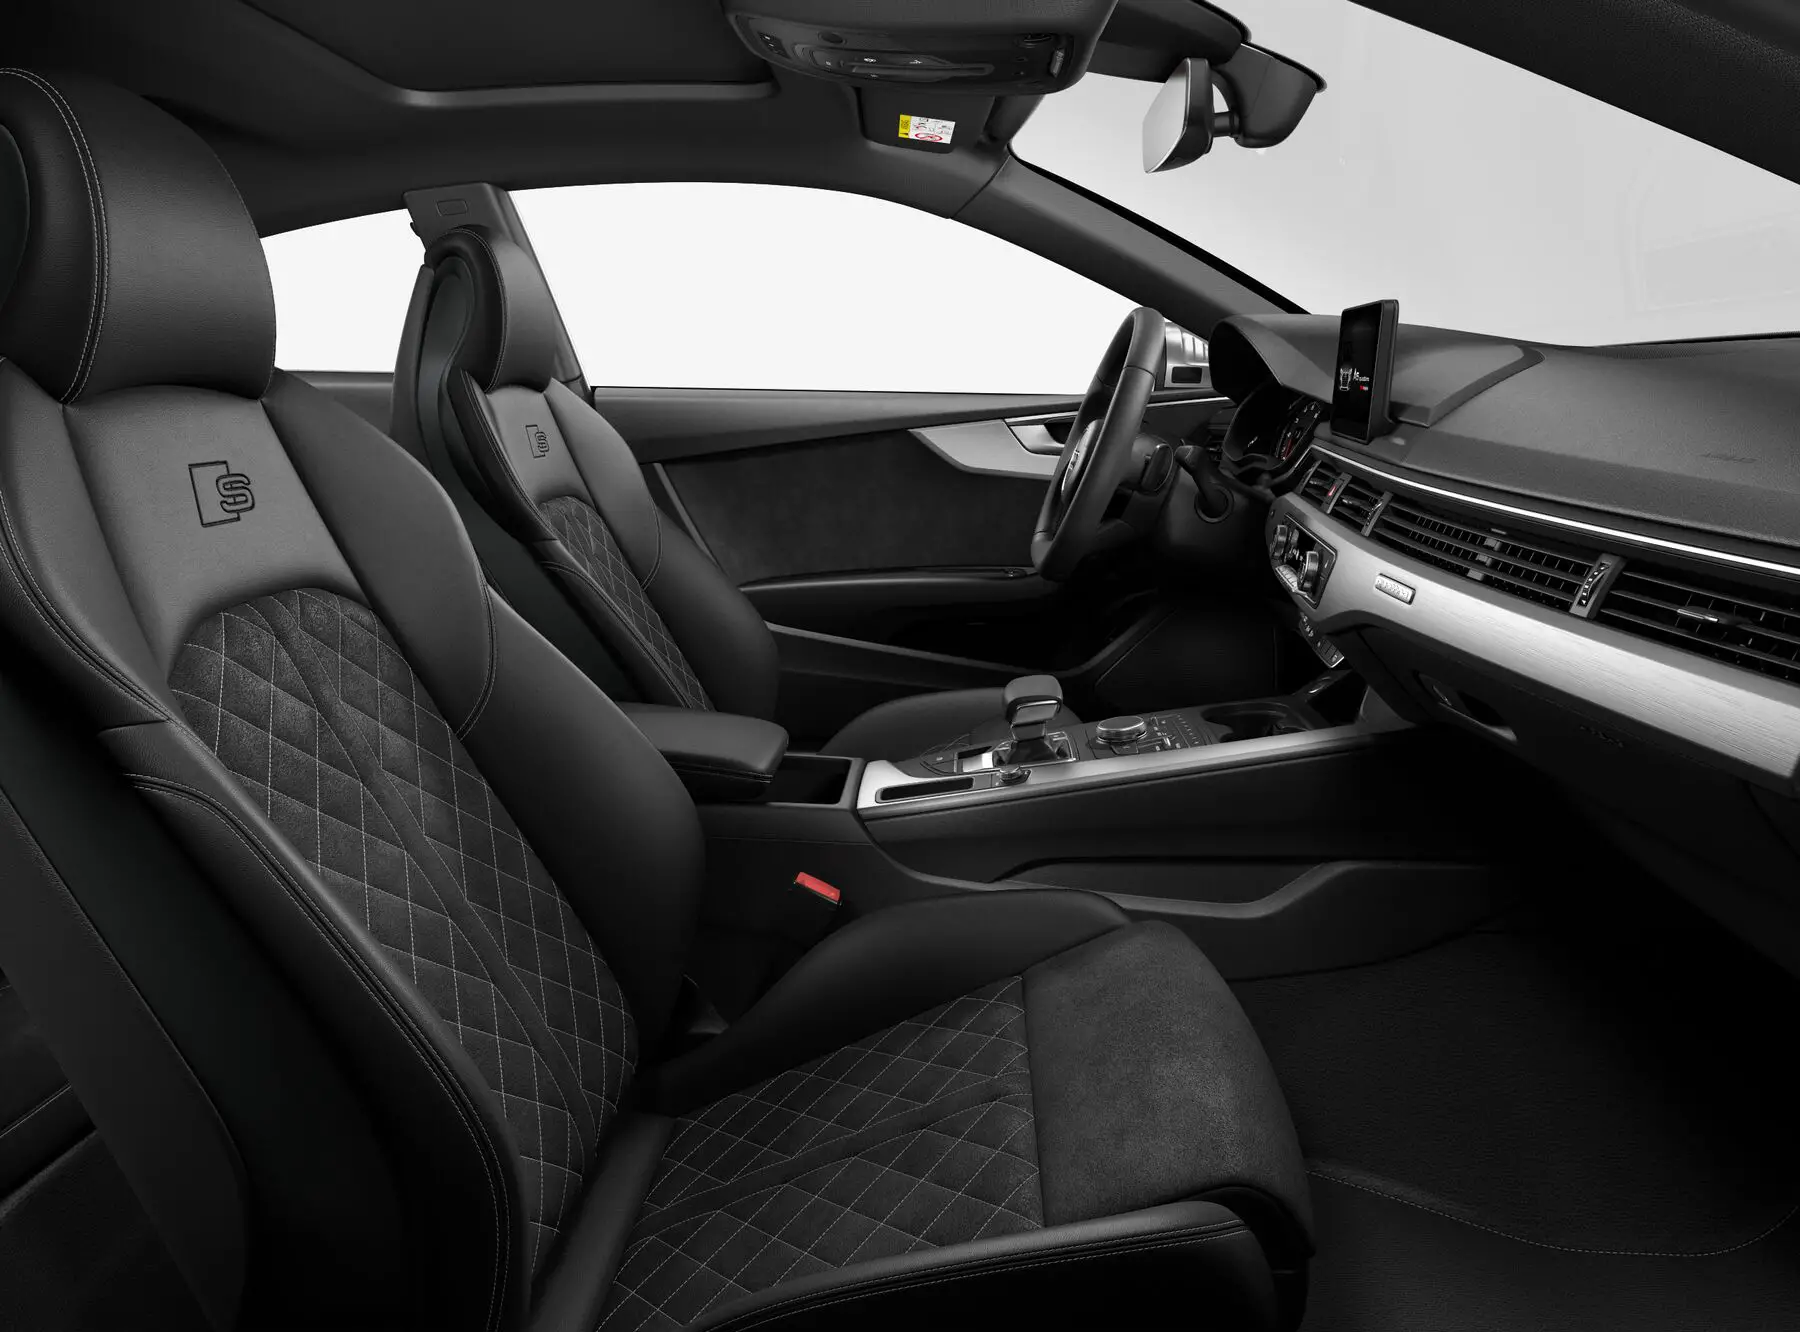 Audi S5 Premium Plus front seat side view